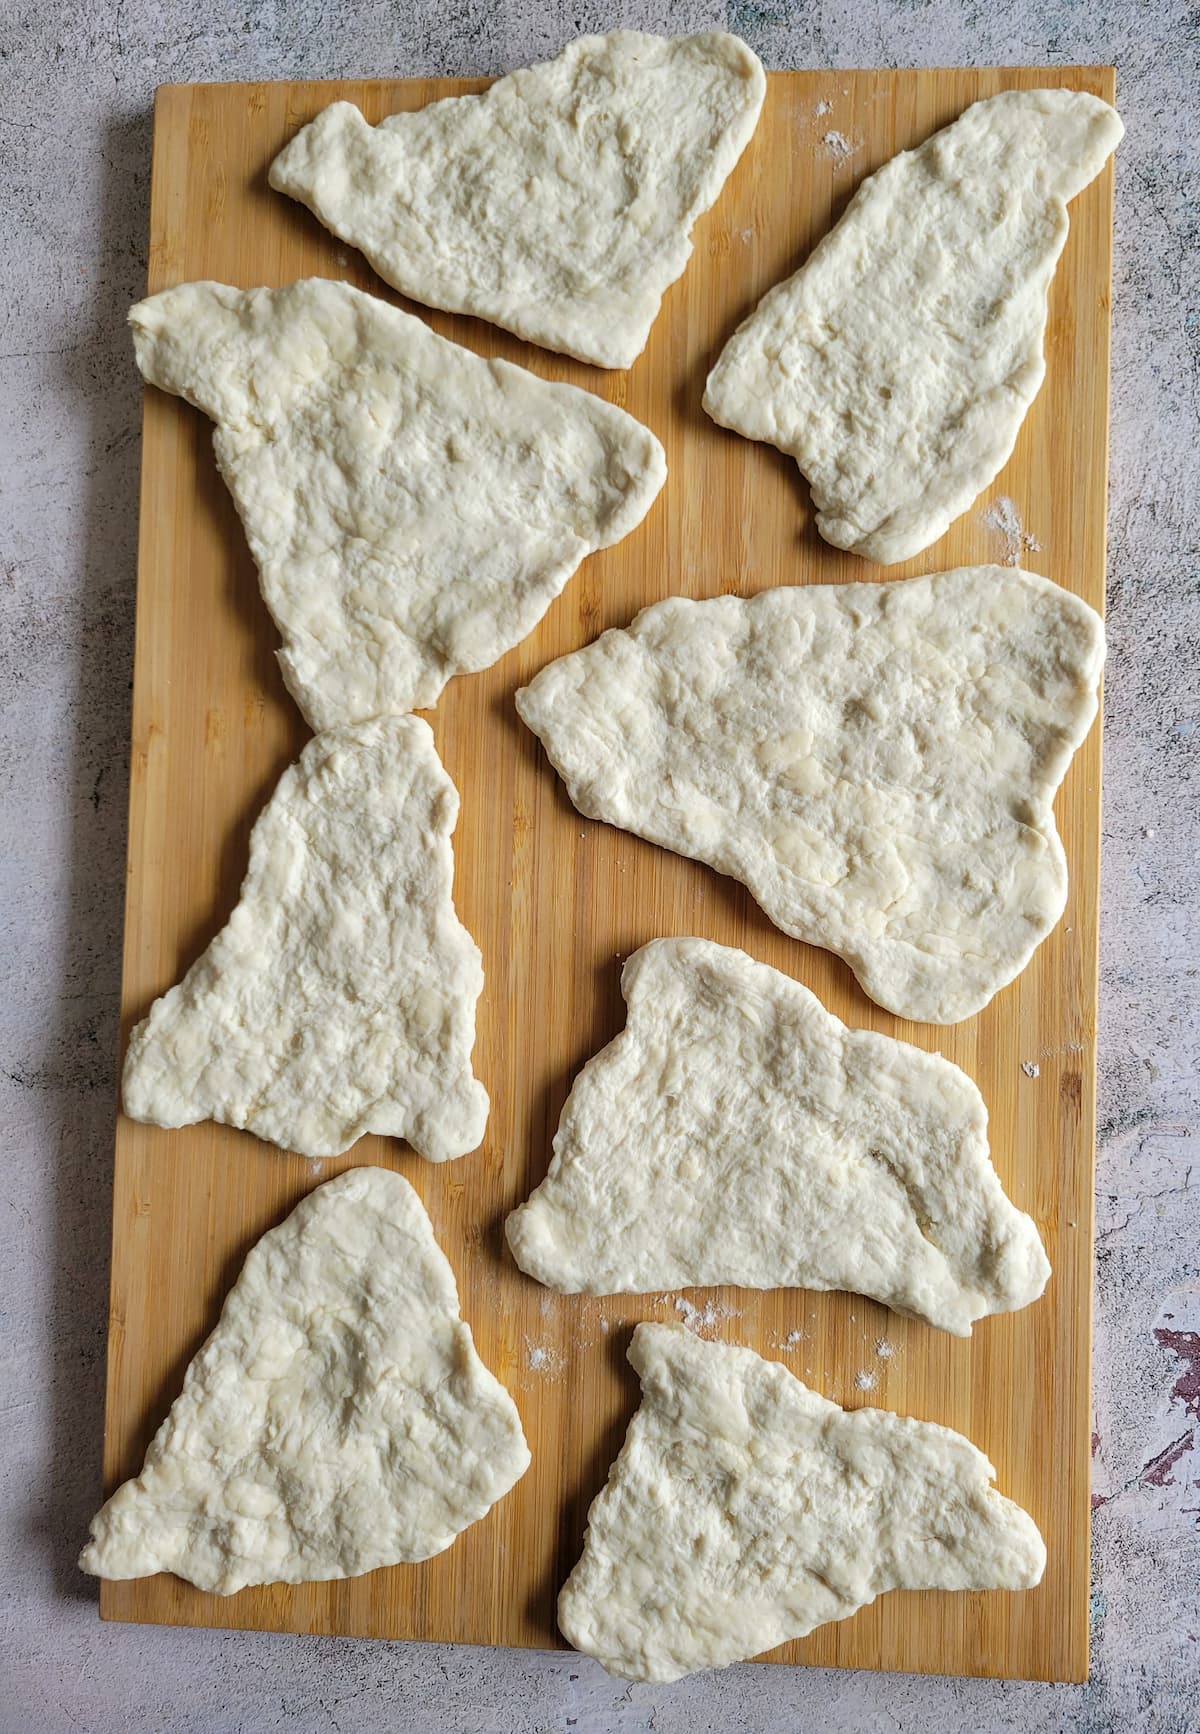 triangular pieces of dough on a cutting board